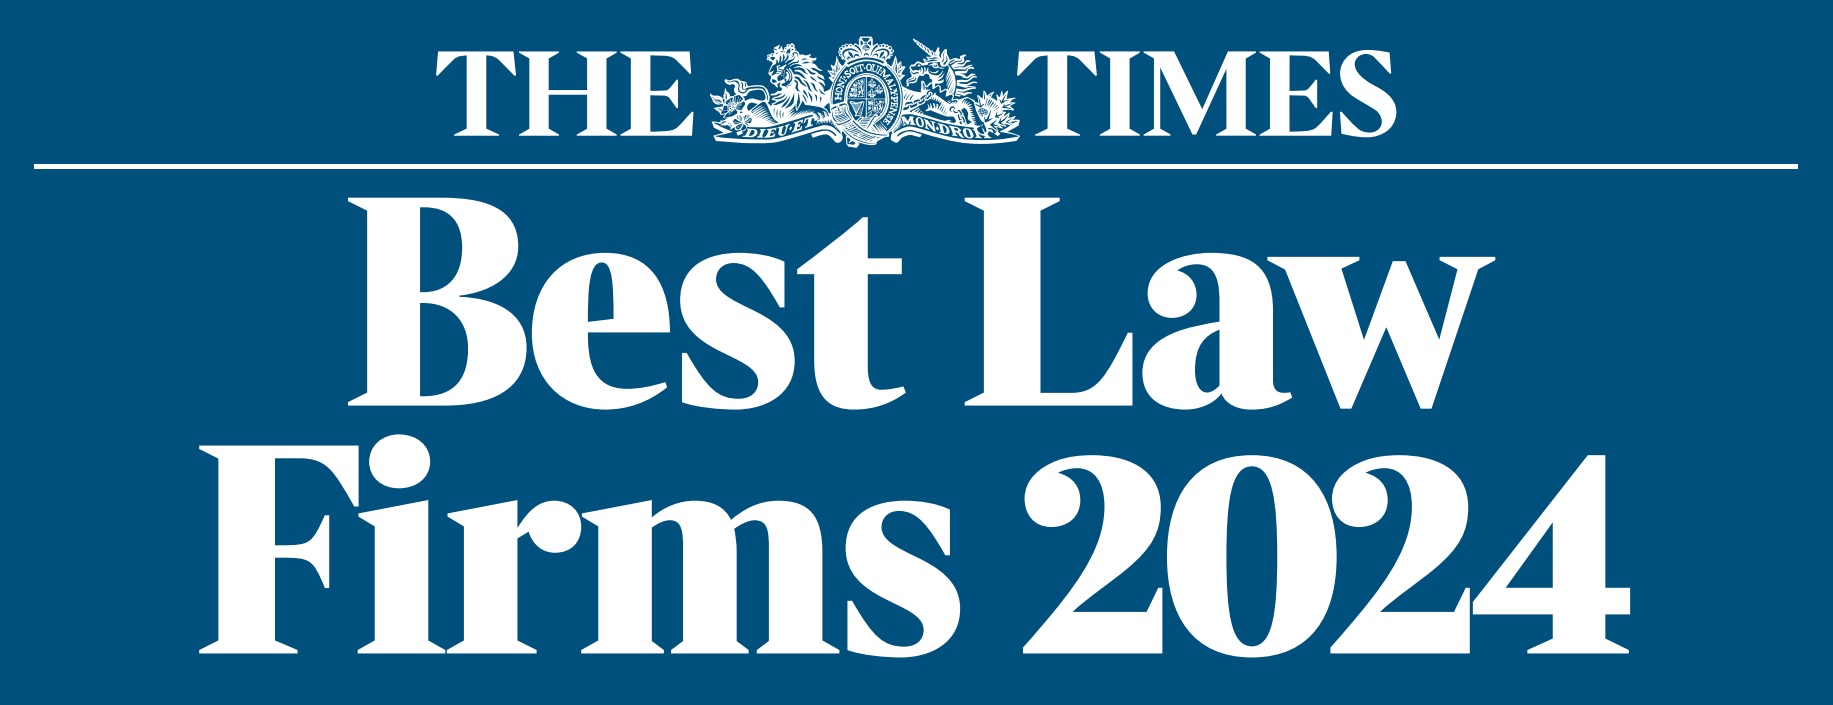 Times-Best-Law-Firms-2024.jpg